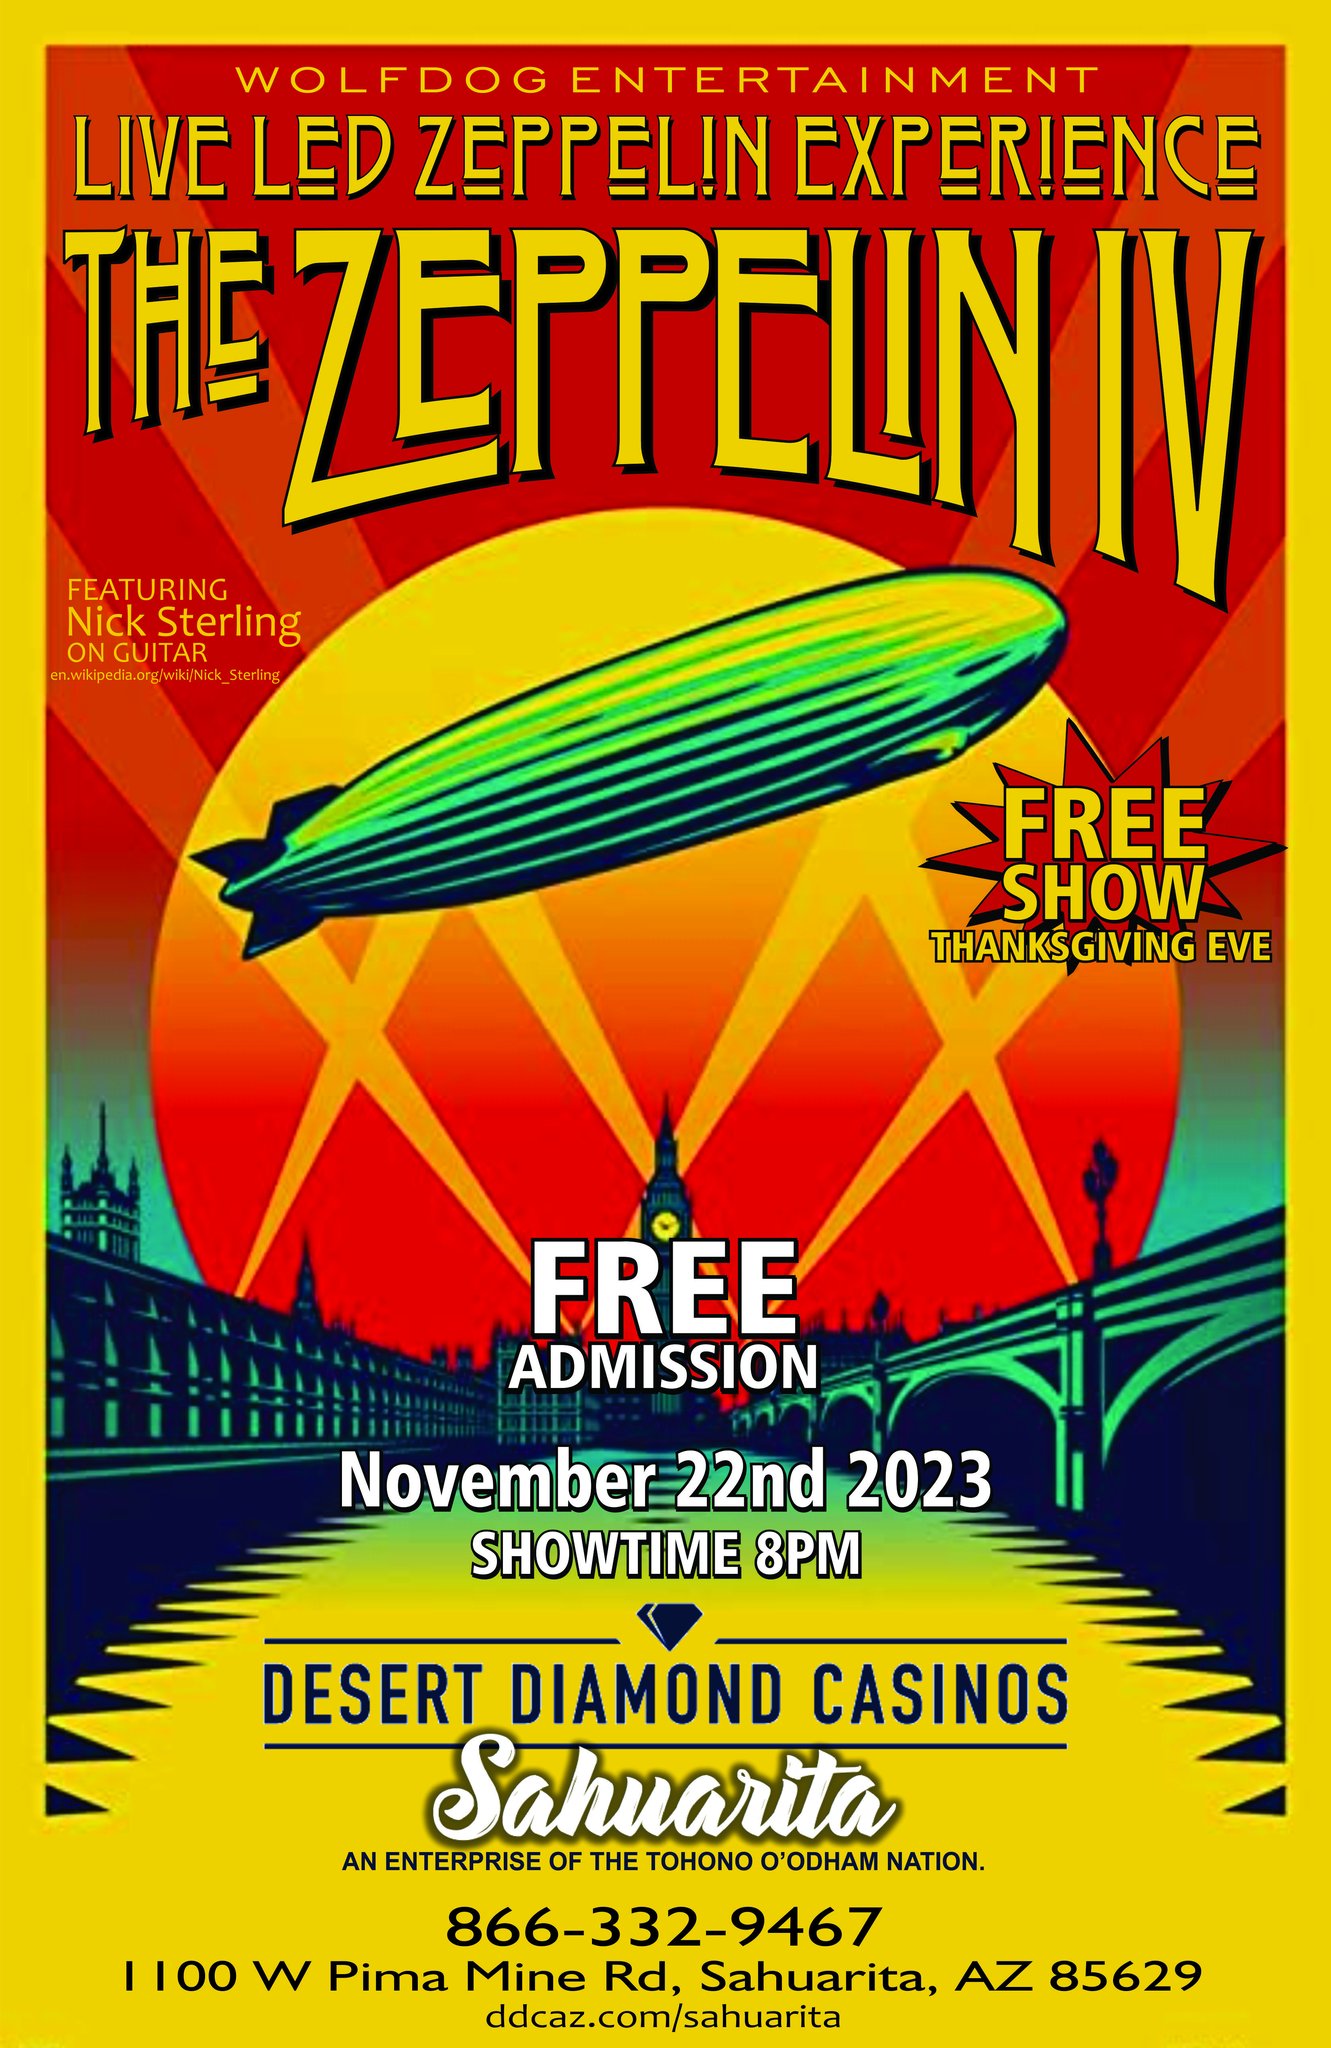 The Zeppelin IV Live Led Zeppelin Experience @ Desert Diamond Casinos Sahaurita Sahaurita AZ 85629   11/22/2023 A TRUE LIVE Led Zeppelin experience.